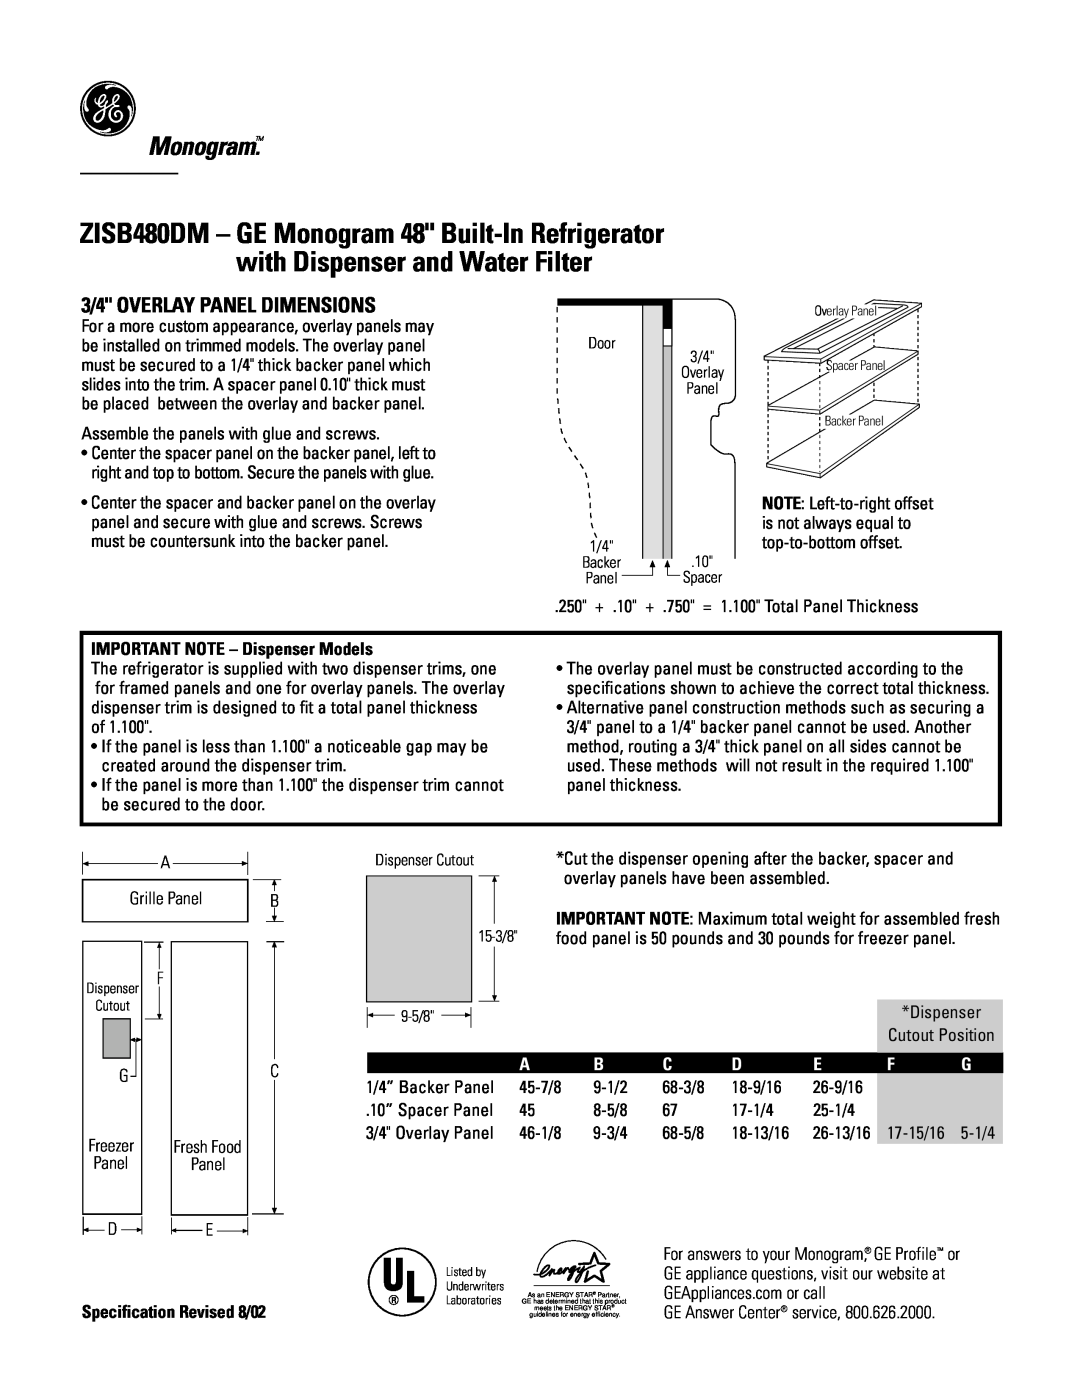 GE Monogram ZISB480DM specifications Monogram, 3/4 OVERLAY PANEL DIMENSIONS, IMPORTANT NOTE - Dispenser Models 